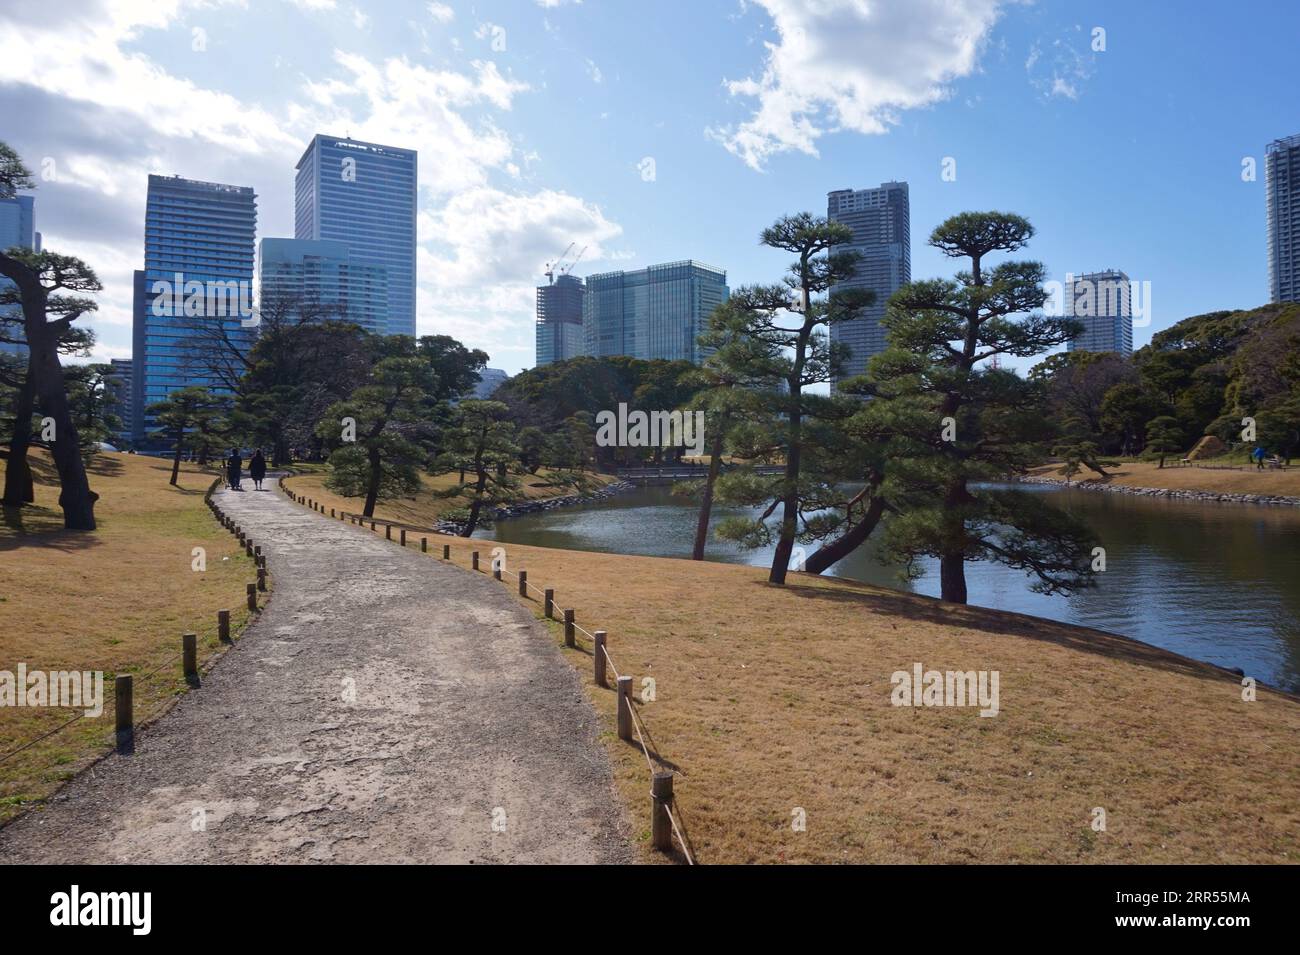 Hamarikyu Gardens, quartiere di Chūō, Tokyo, Giappone. Un sentiero si snoda attraverso gli splendidi giardini Hama-Rikyū Foto Stock